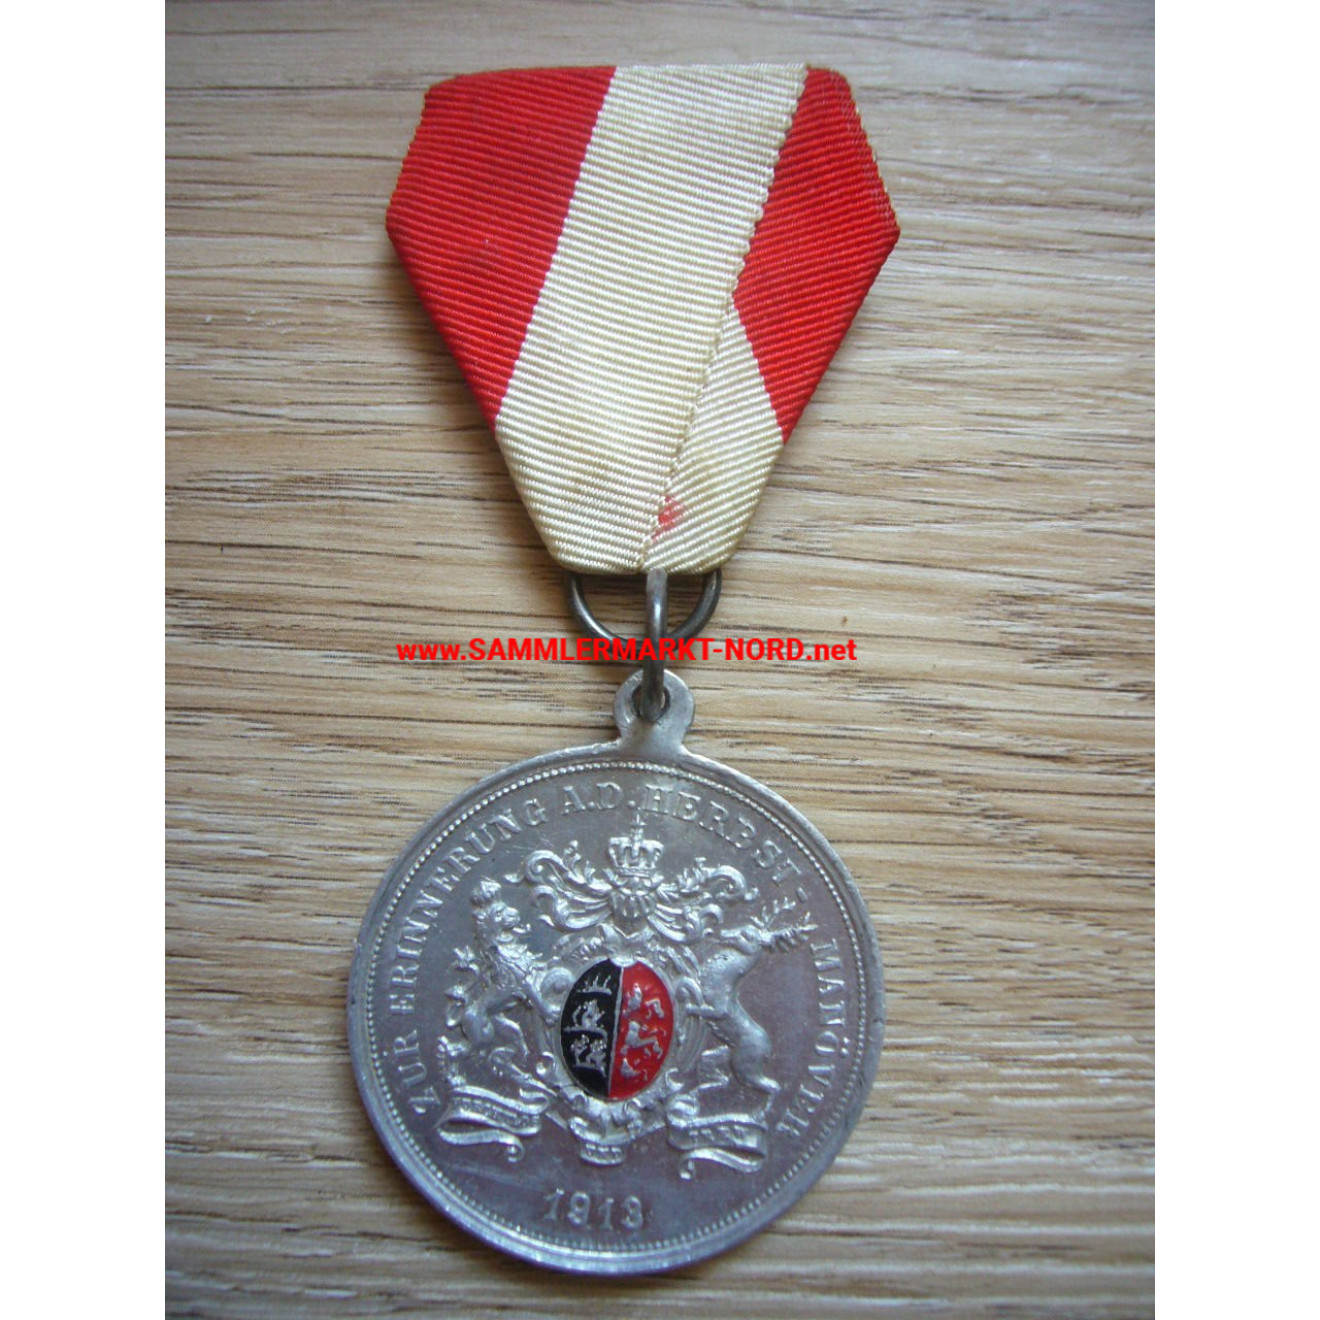 Württemberg - Medaille zur Erinnerung an das Herbst Manöver 1913